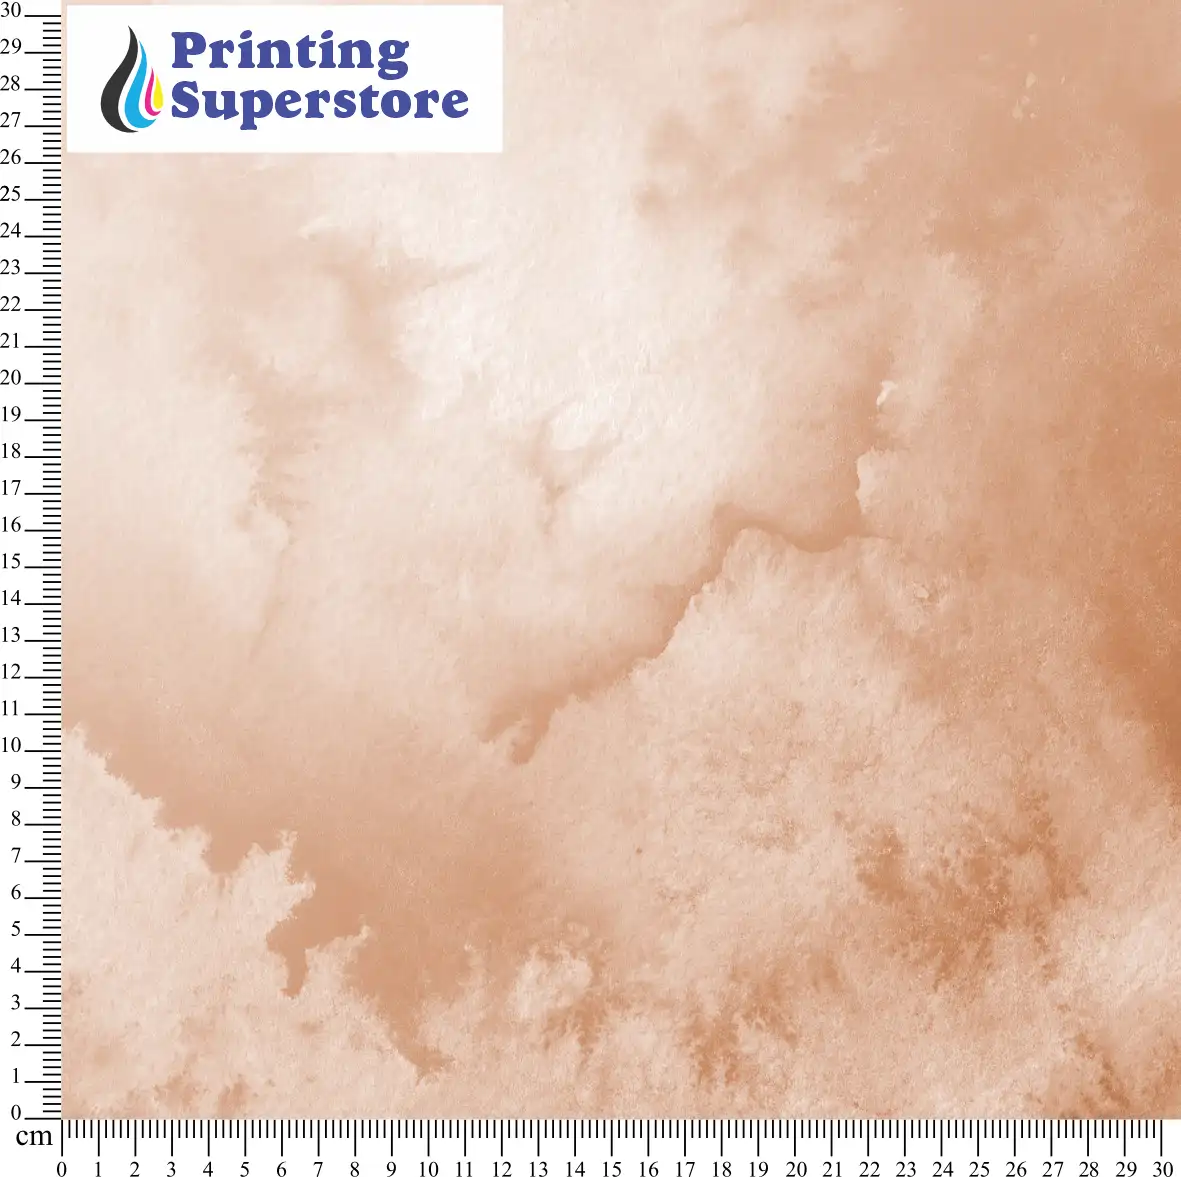 Brown Watercolour theme pattern printed on Self Adhesive Vinyl (SAV), Heat Transfer Vinyl (HTV) and Cardstock.